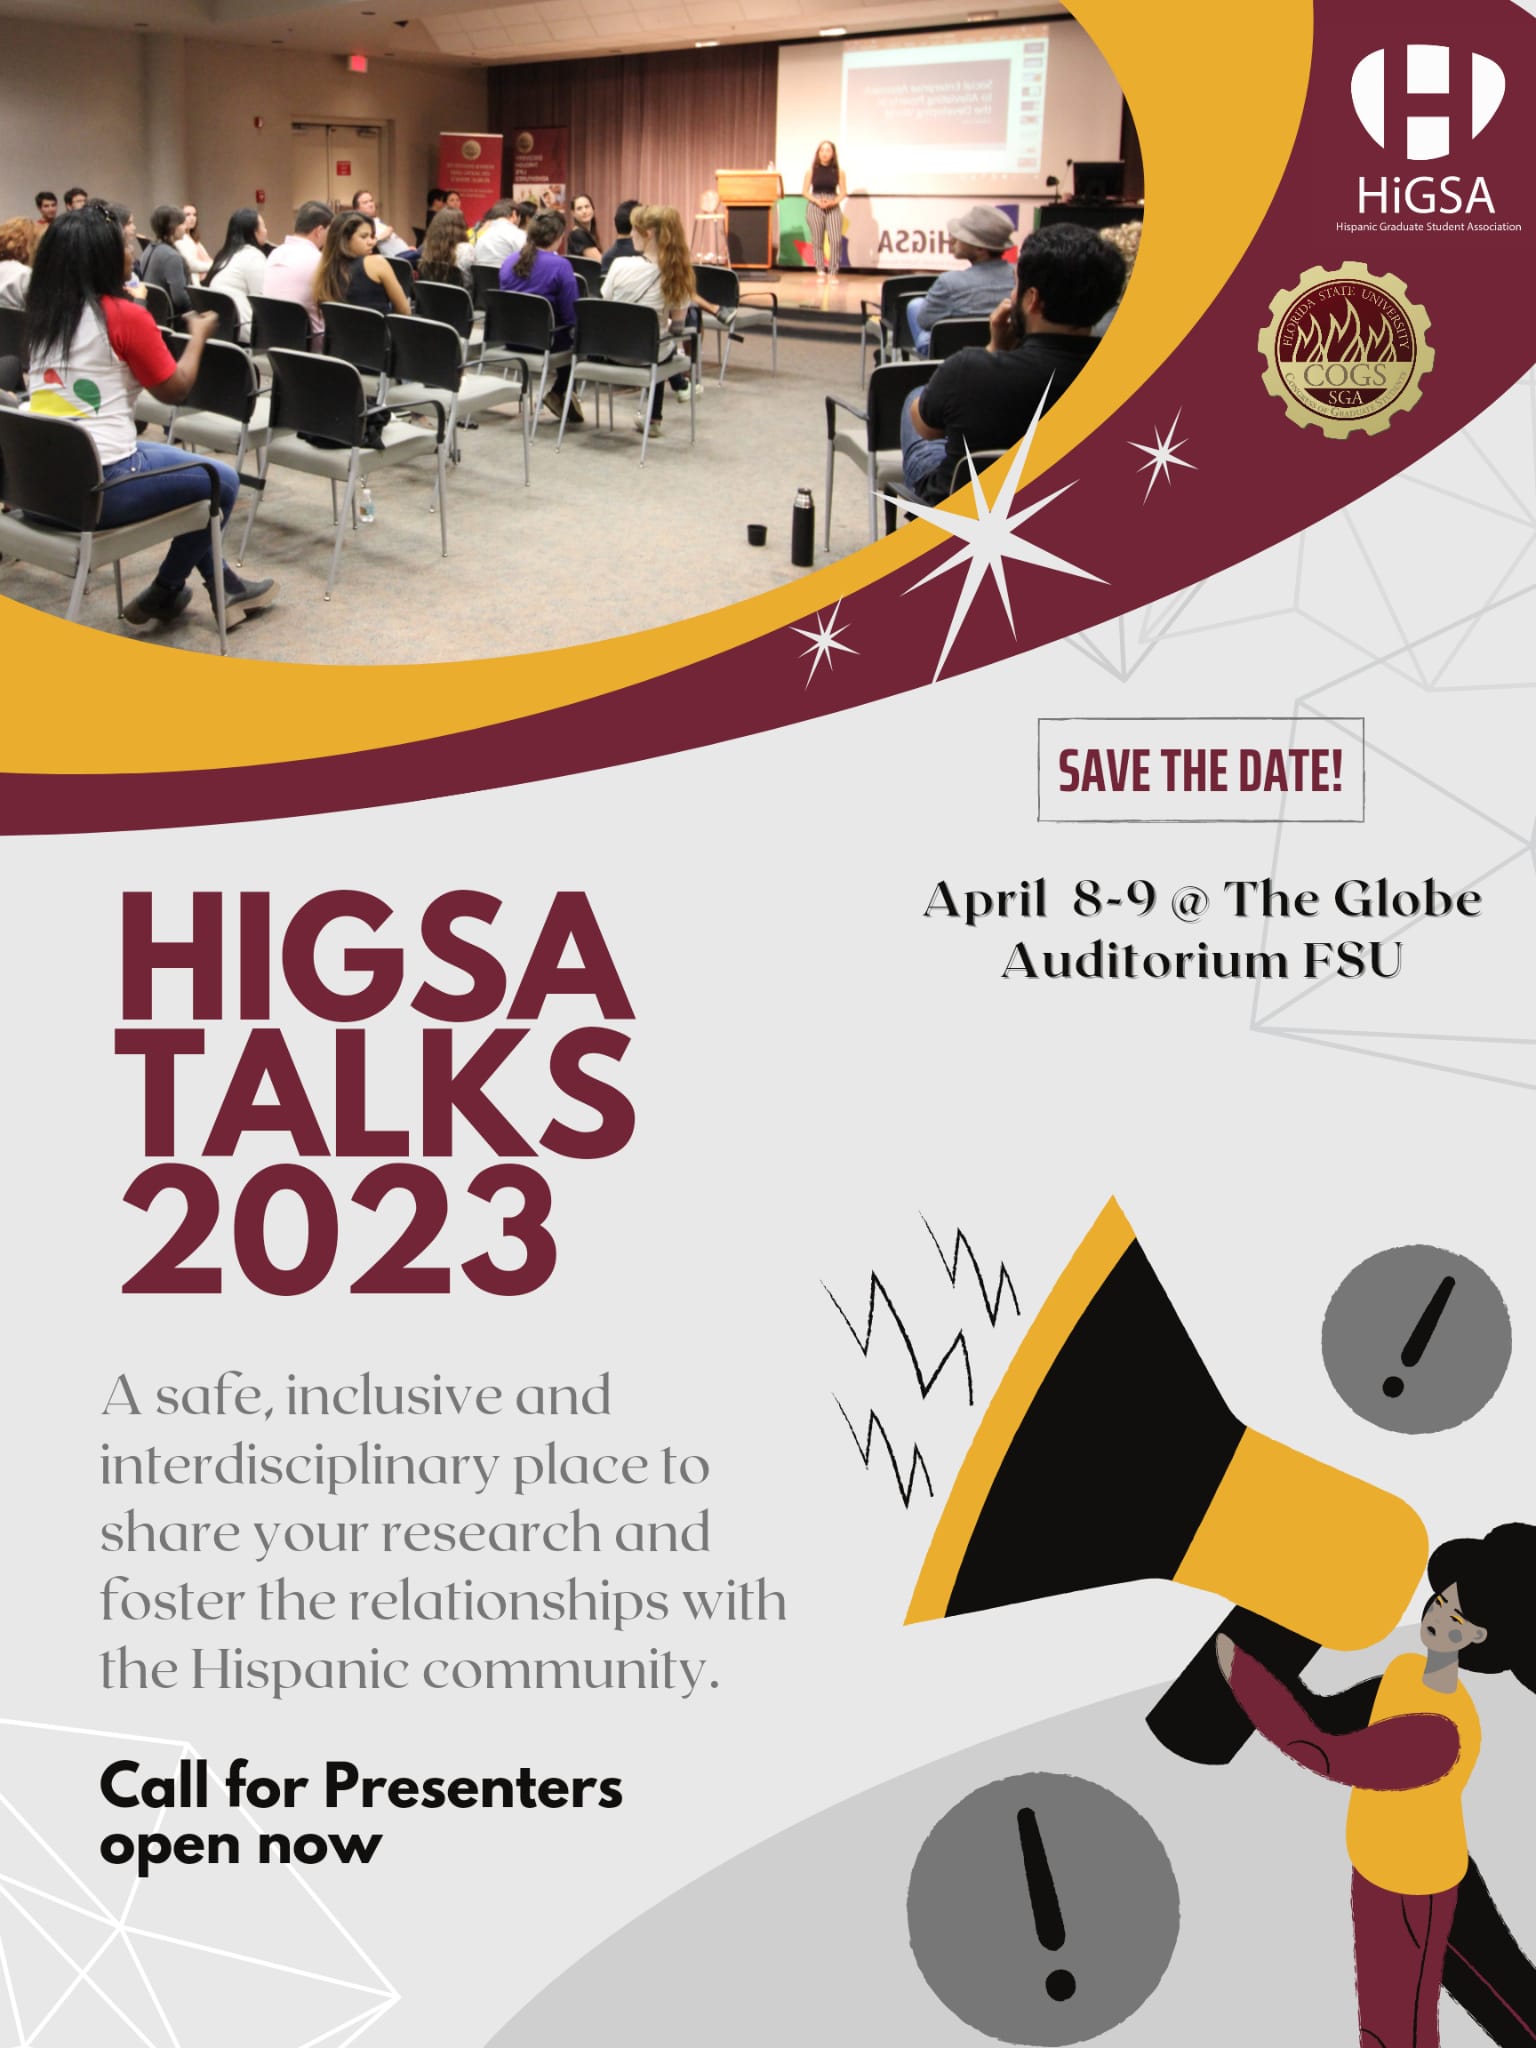 HiGSA Talks Flyer displaying the dates